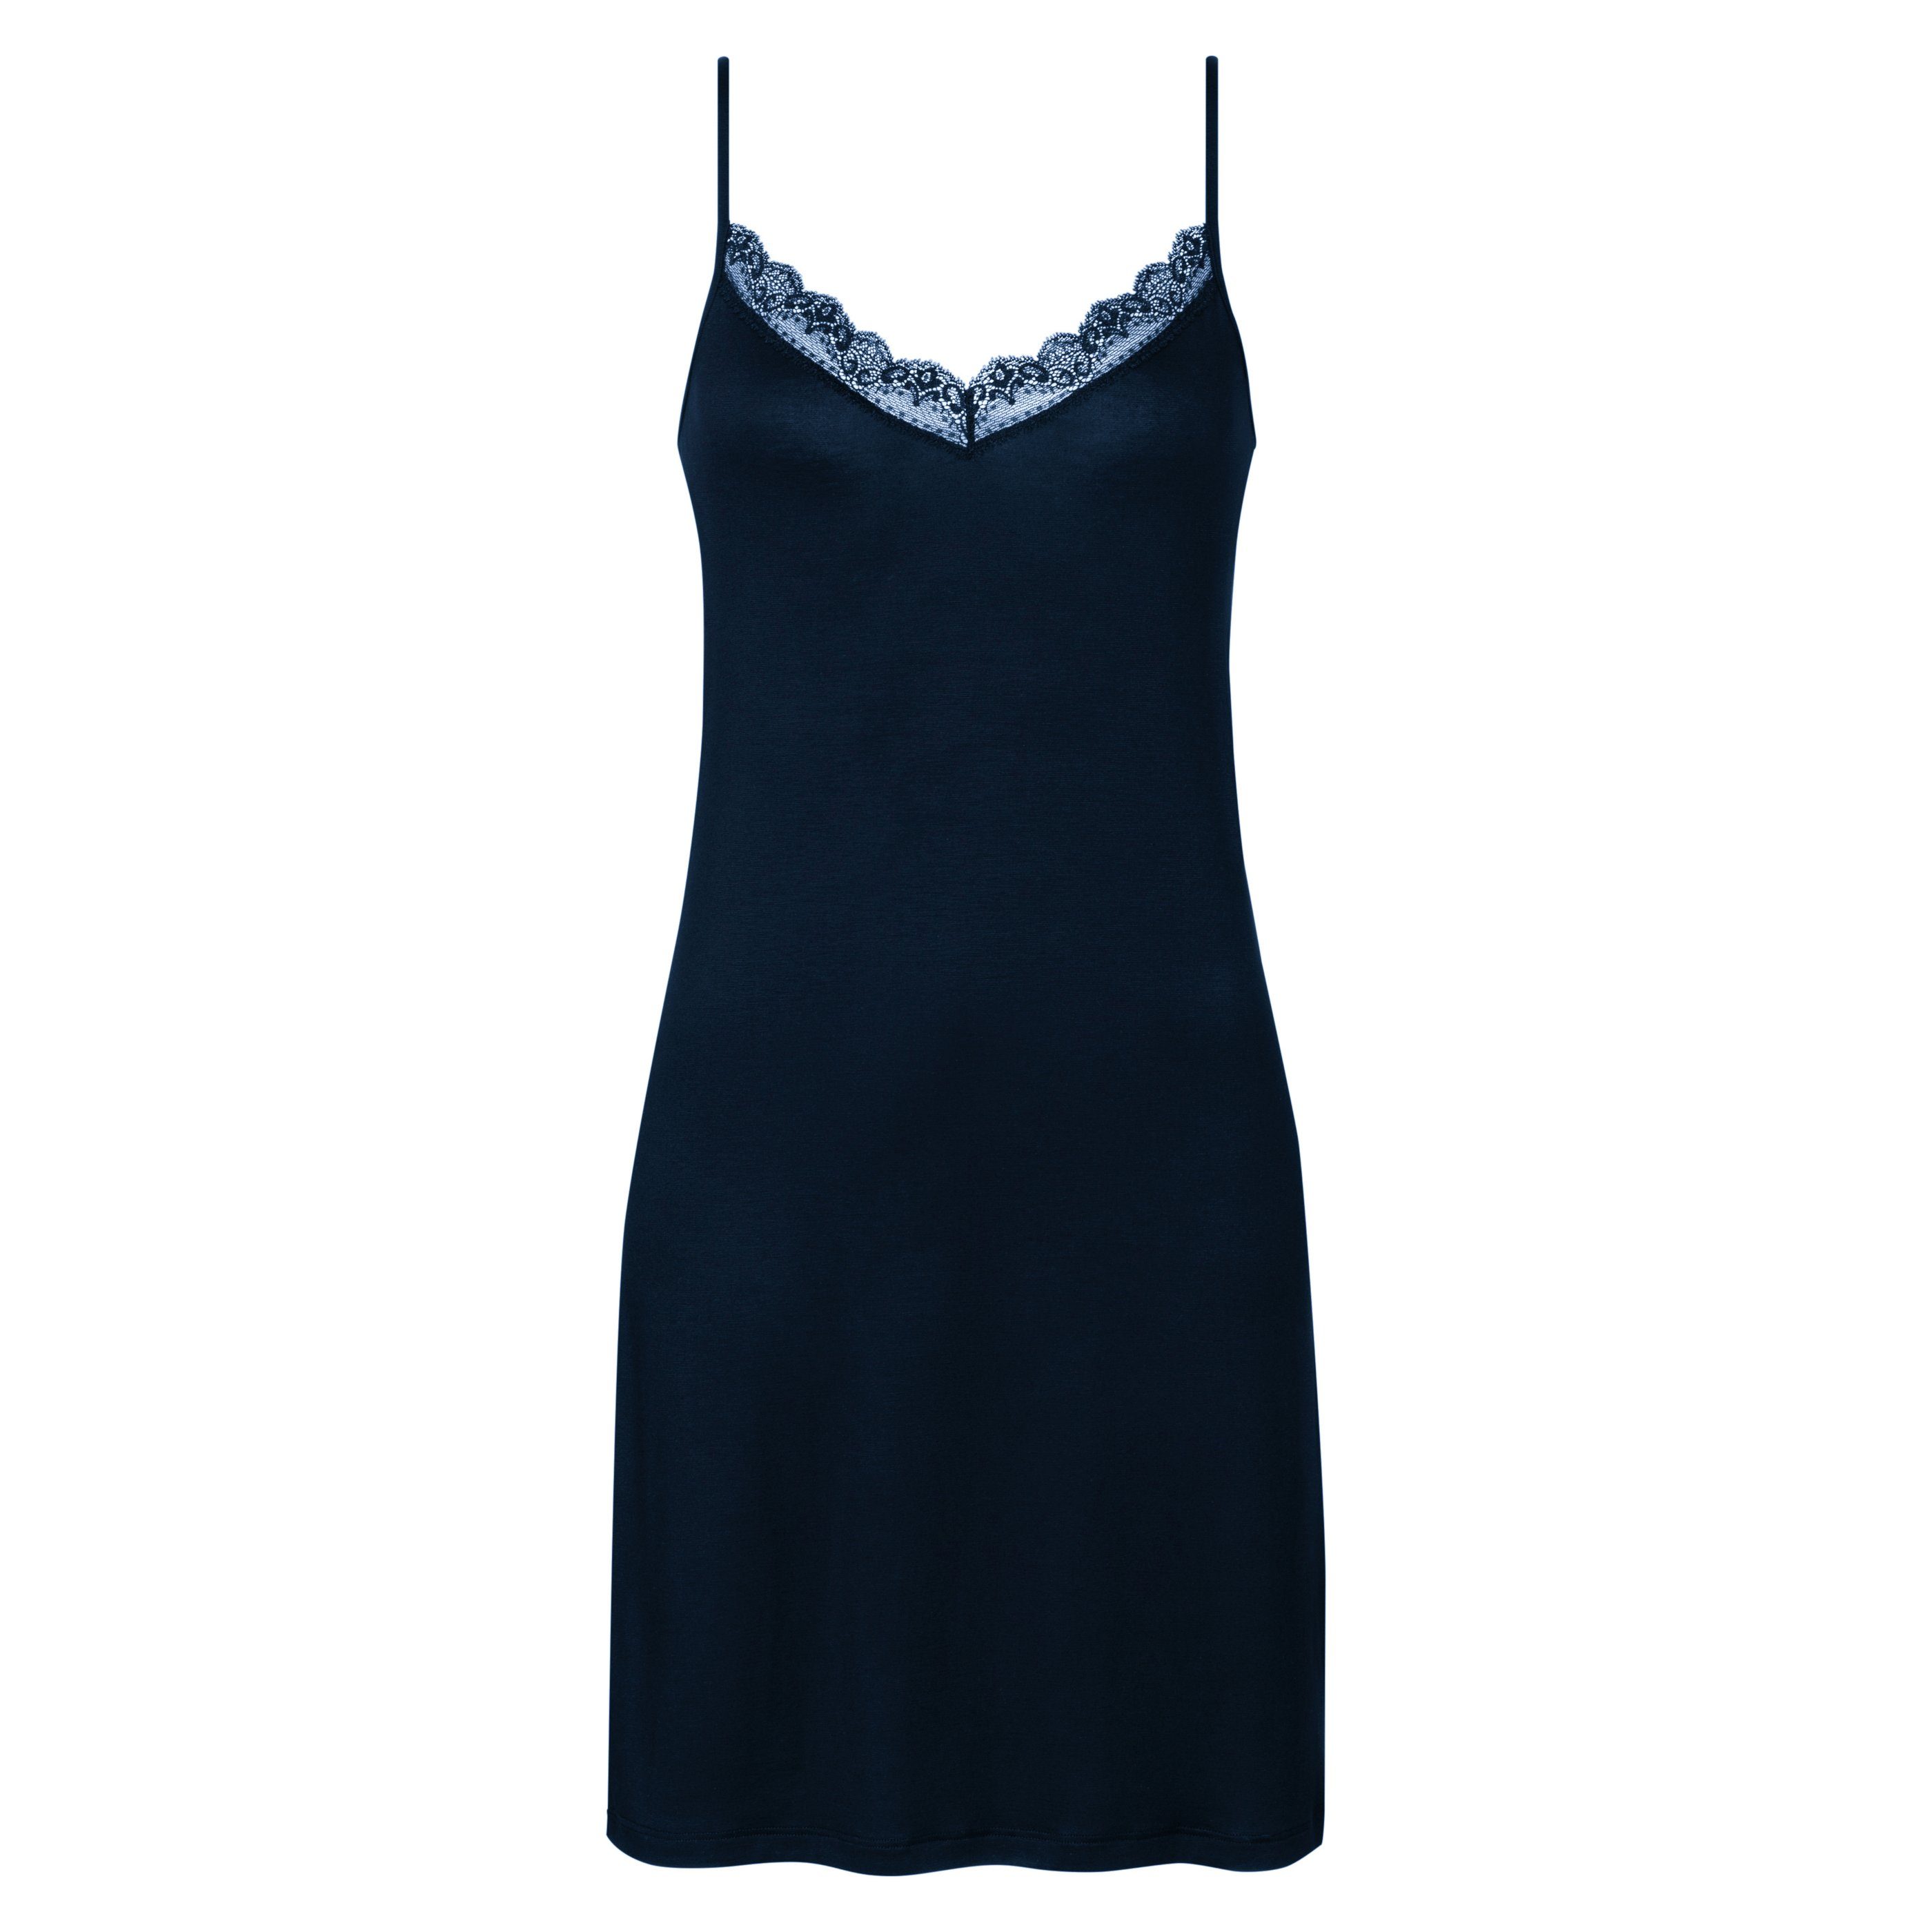 Damen / Mey LUISE SERIE Sleepshirt Dress Nachthemd Body night blue